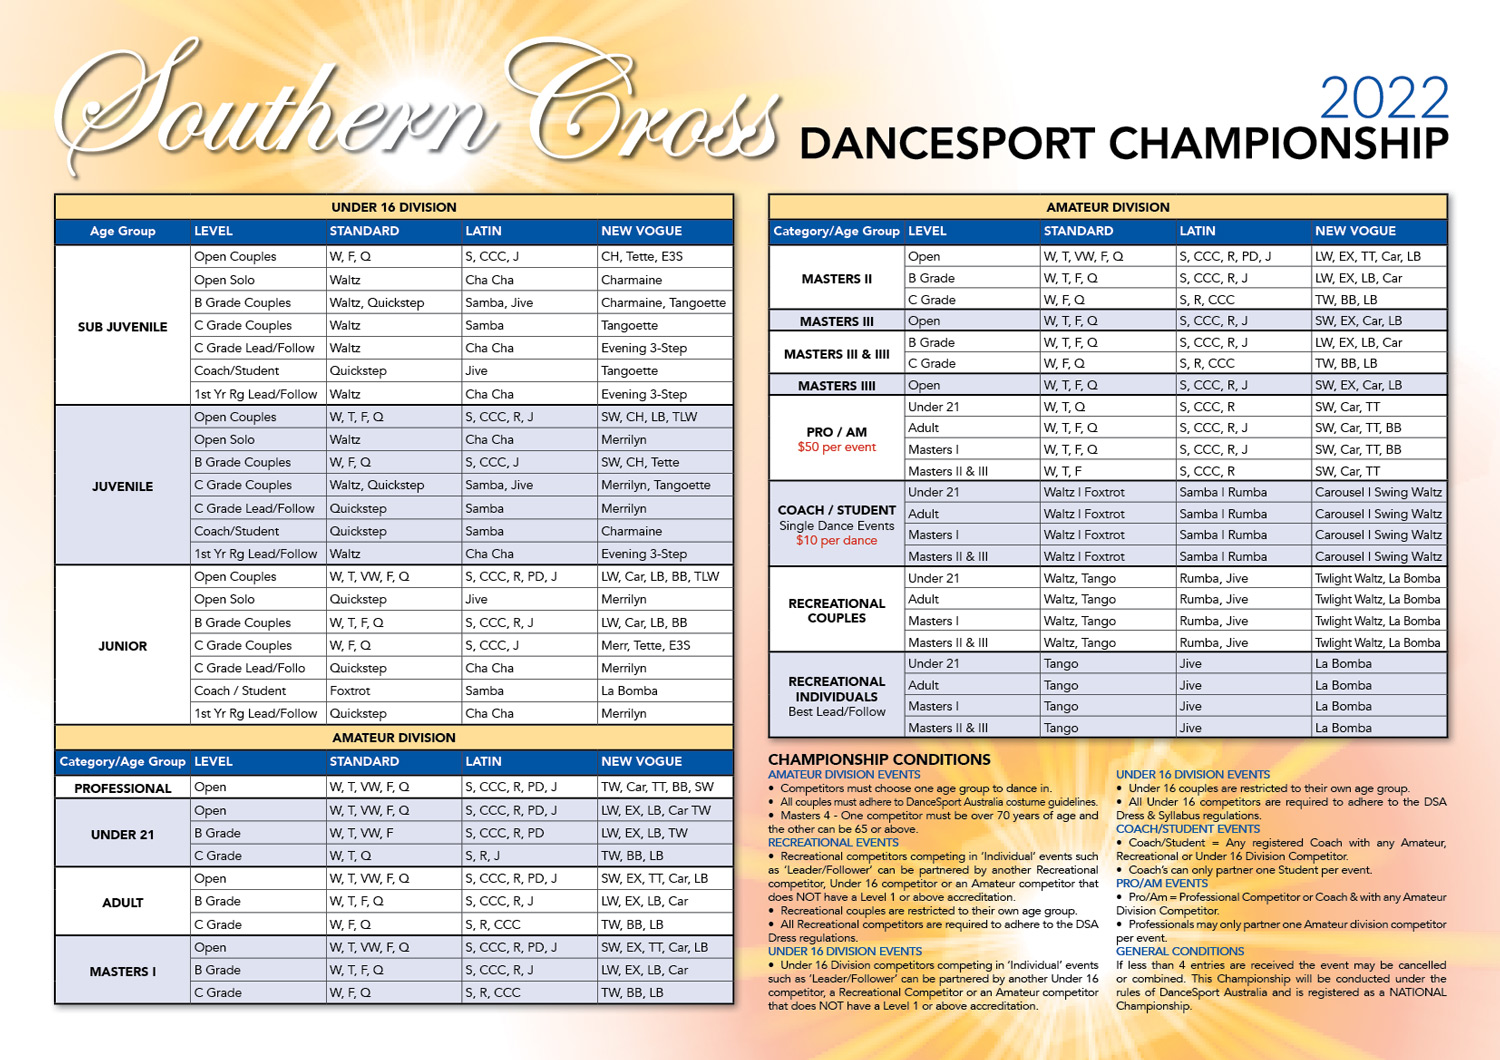 ADS Southern Cross Dancesport Championship Literature